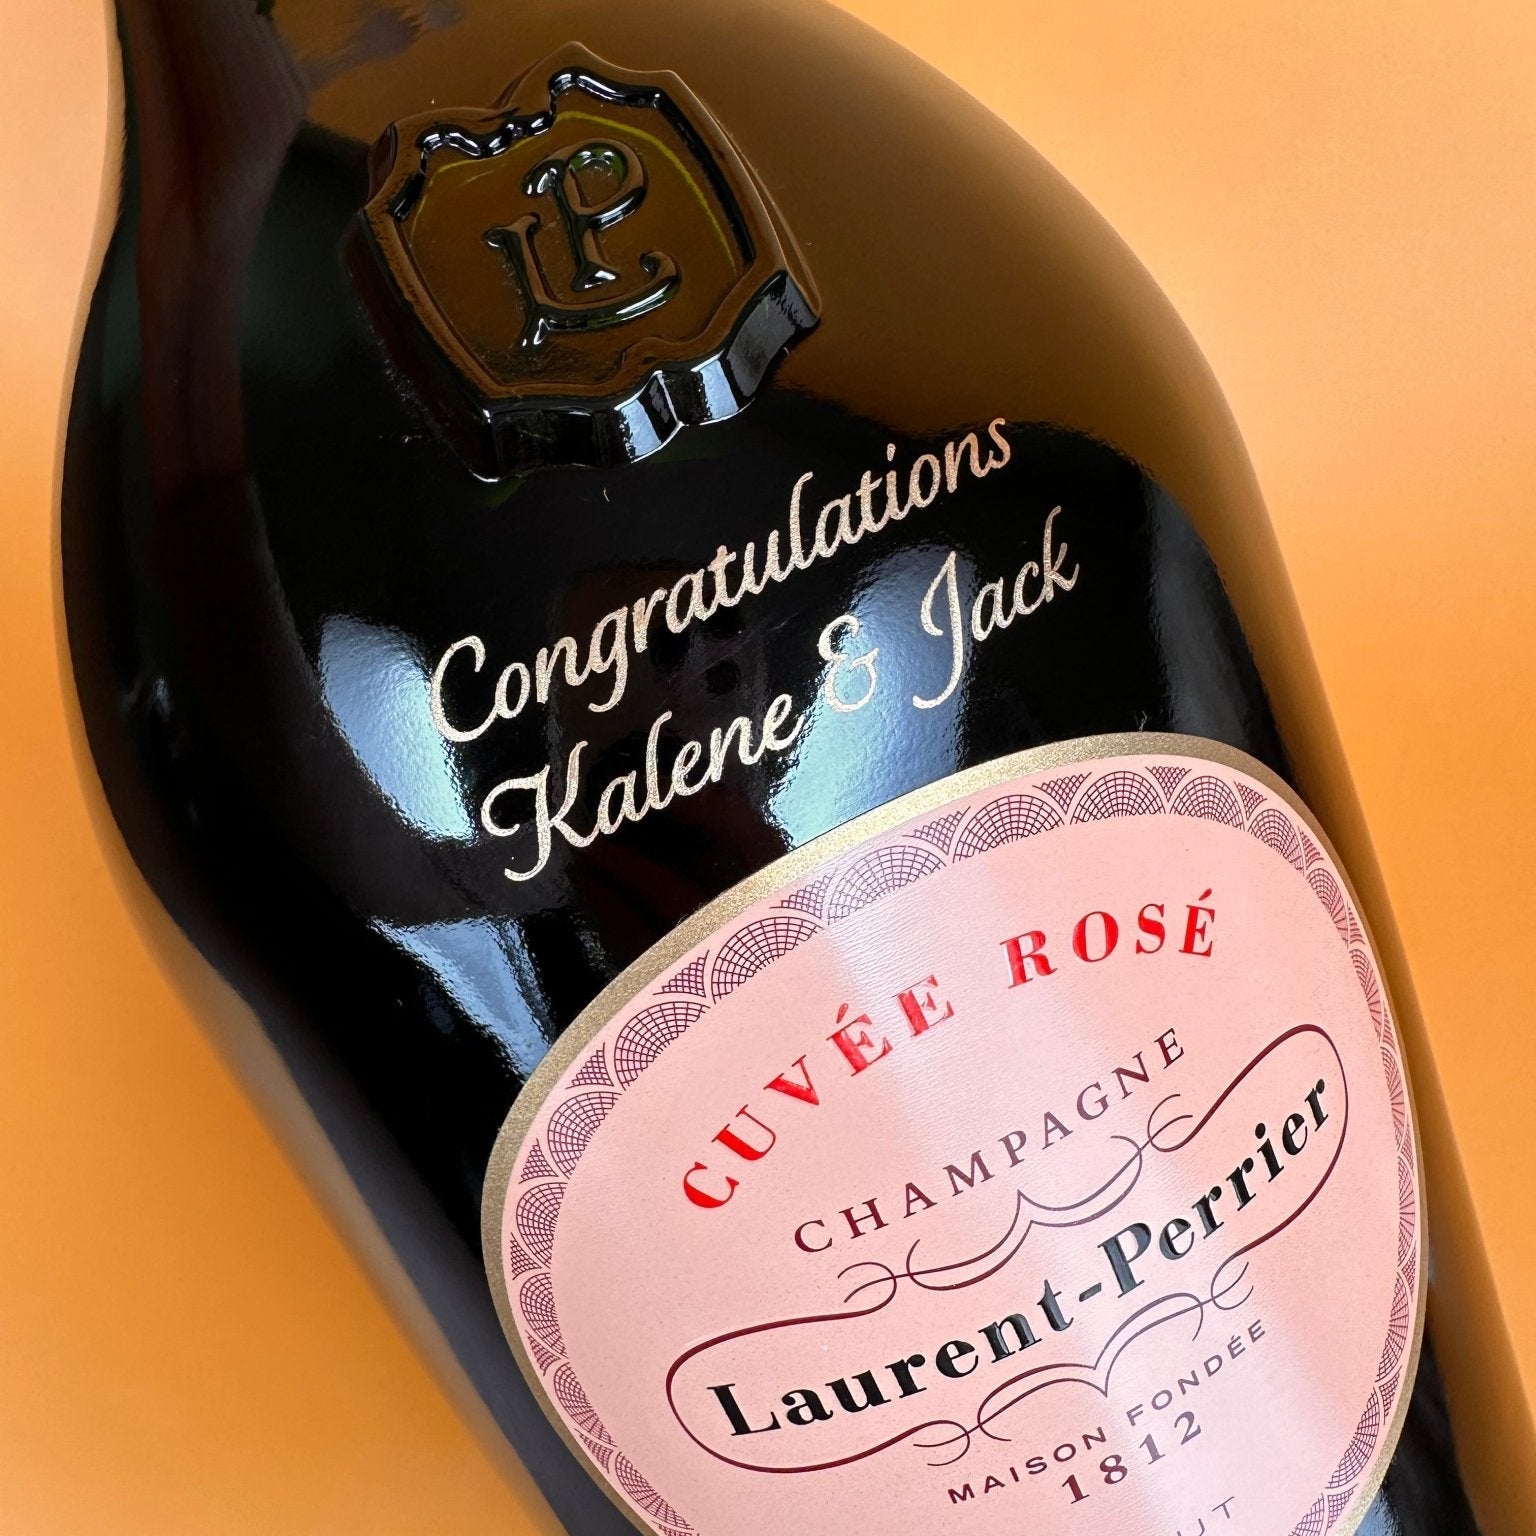 Laurent-Perrier Harmony Demi Sec Champagne  